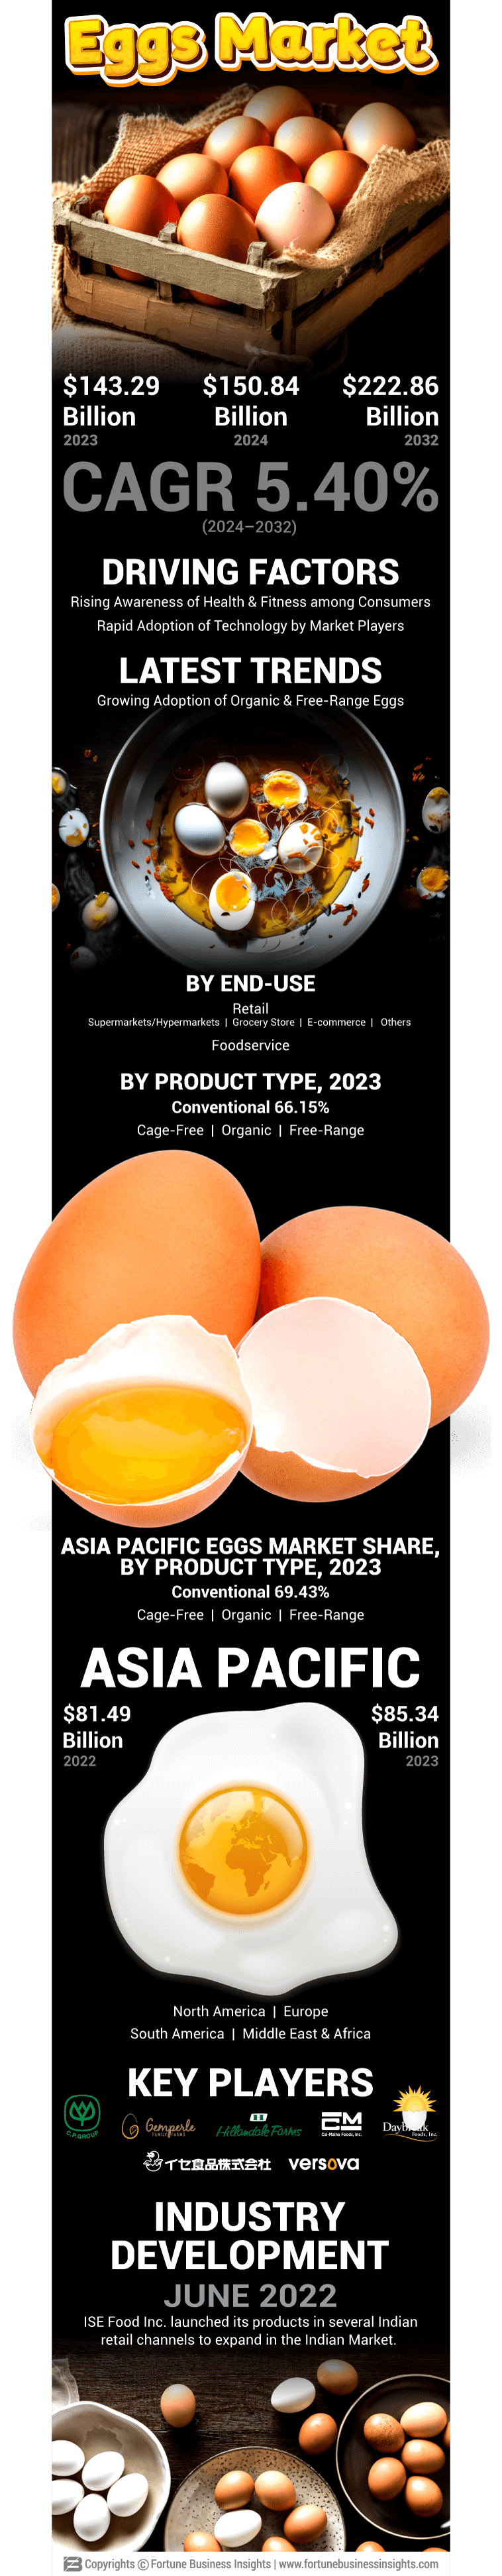 Eggs Market